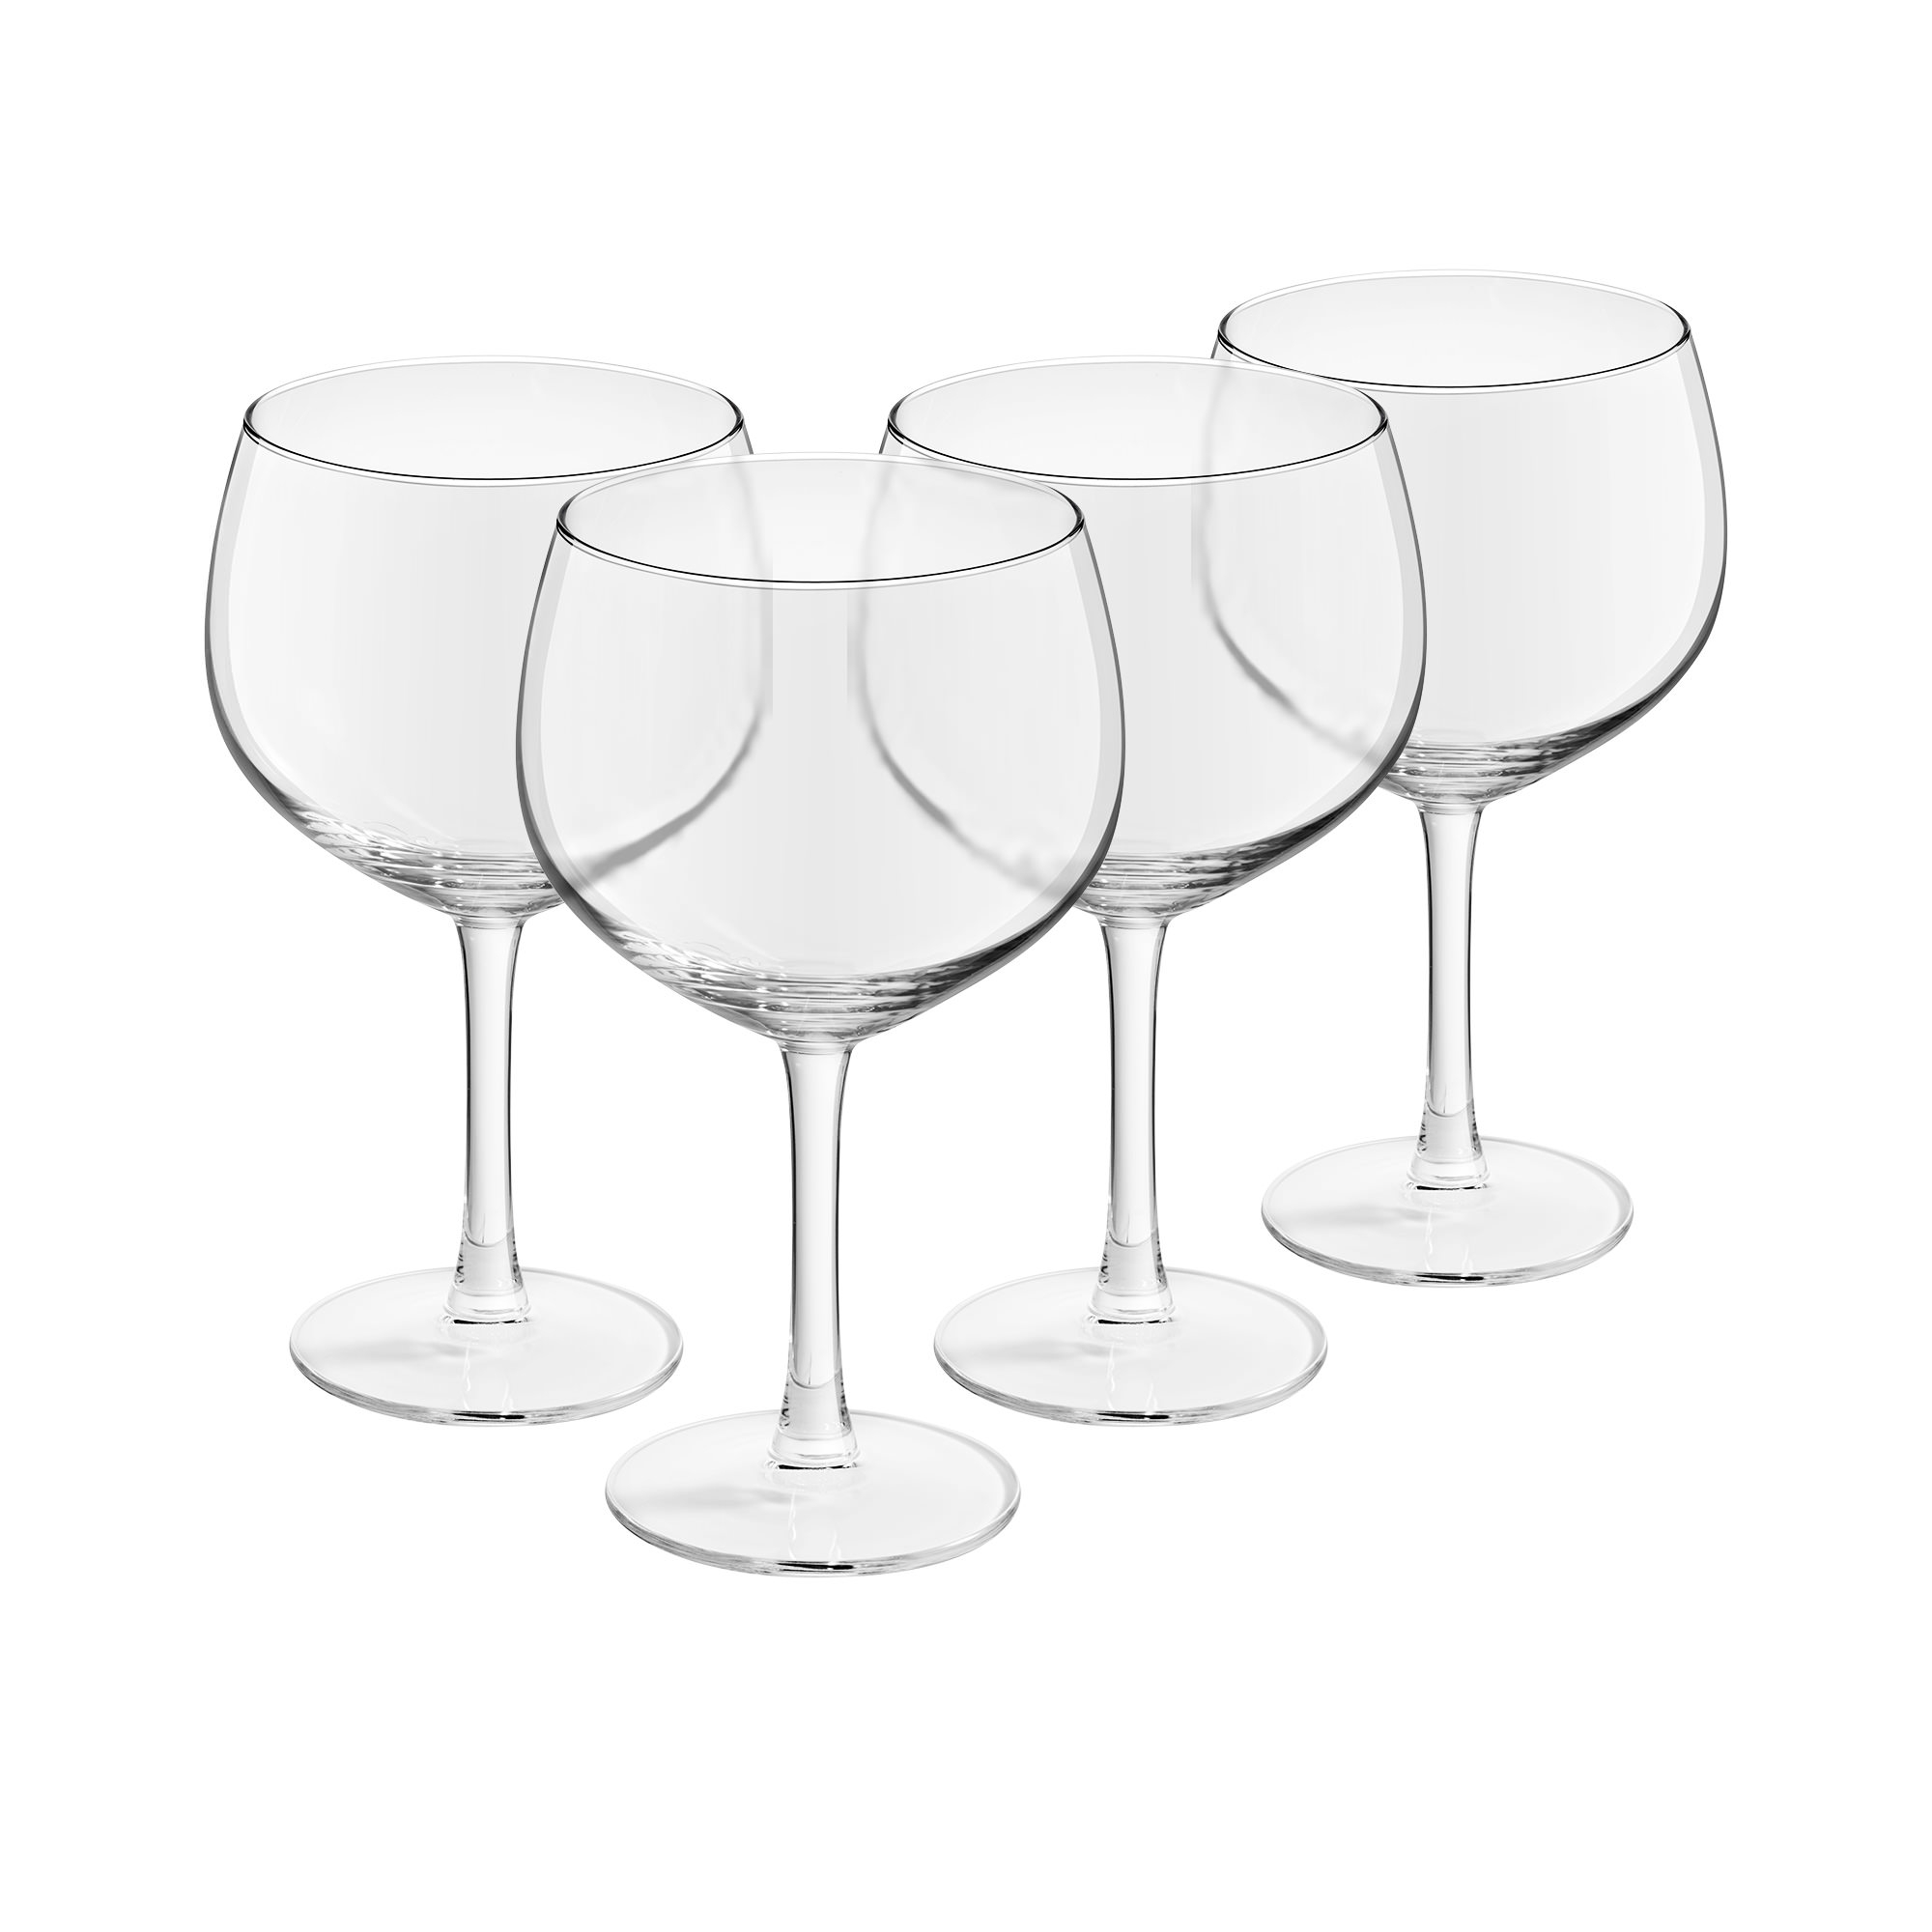 Royal Leerdam Gin & Tonic Glass 650ml Set of 4 Image 1